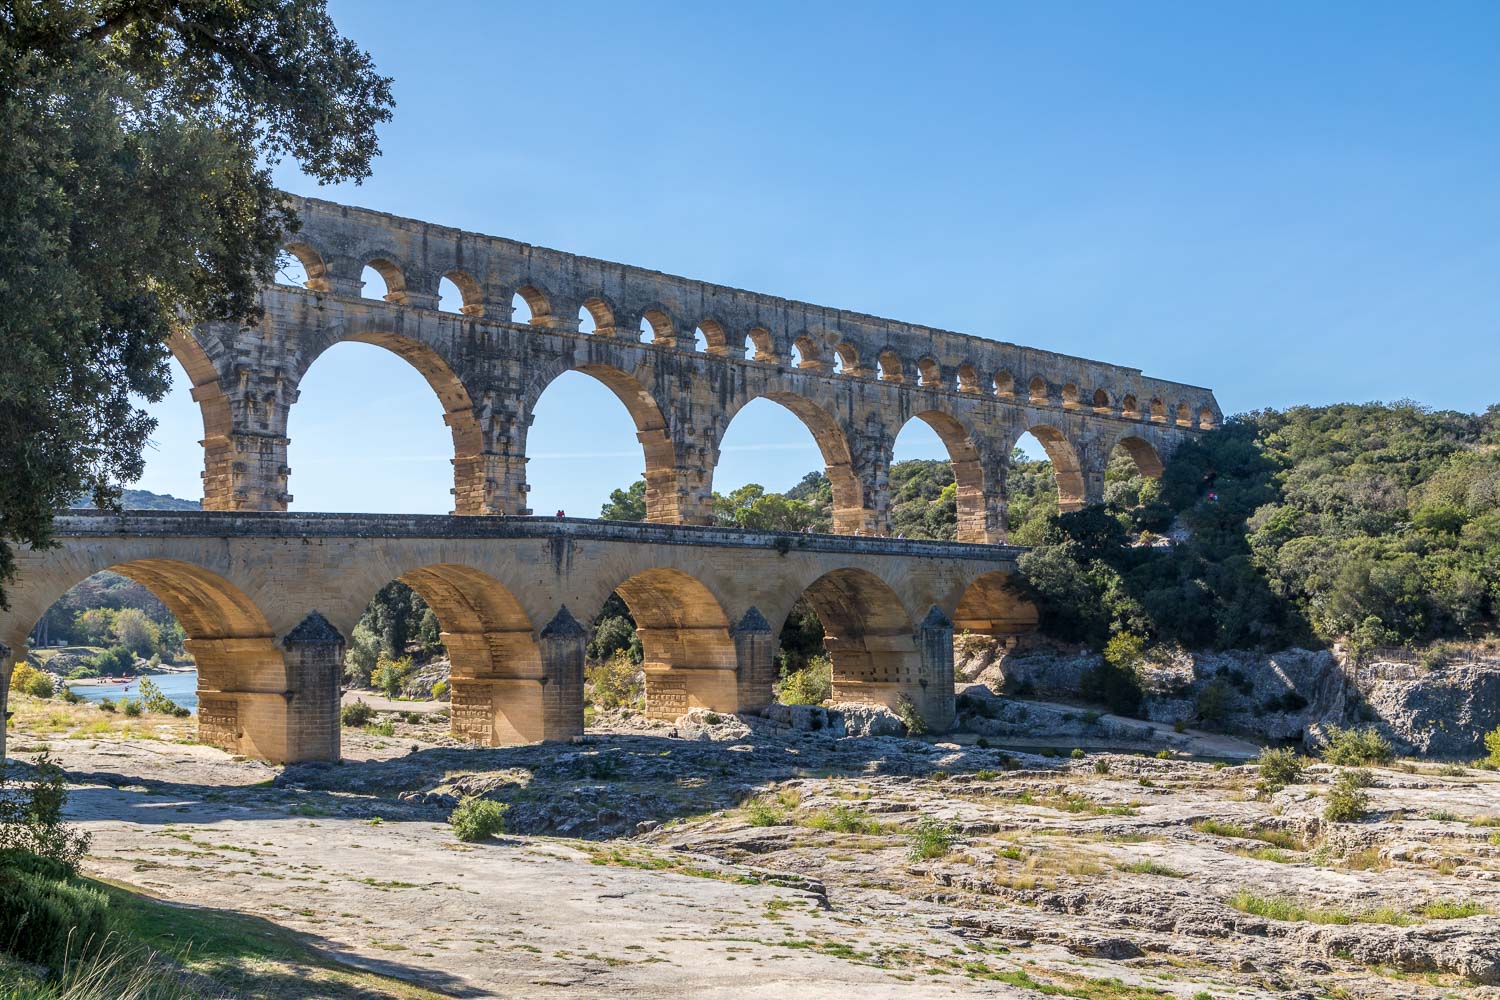 Pont du Gard arches